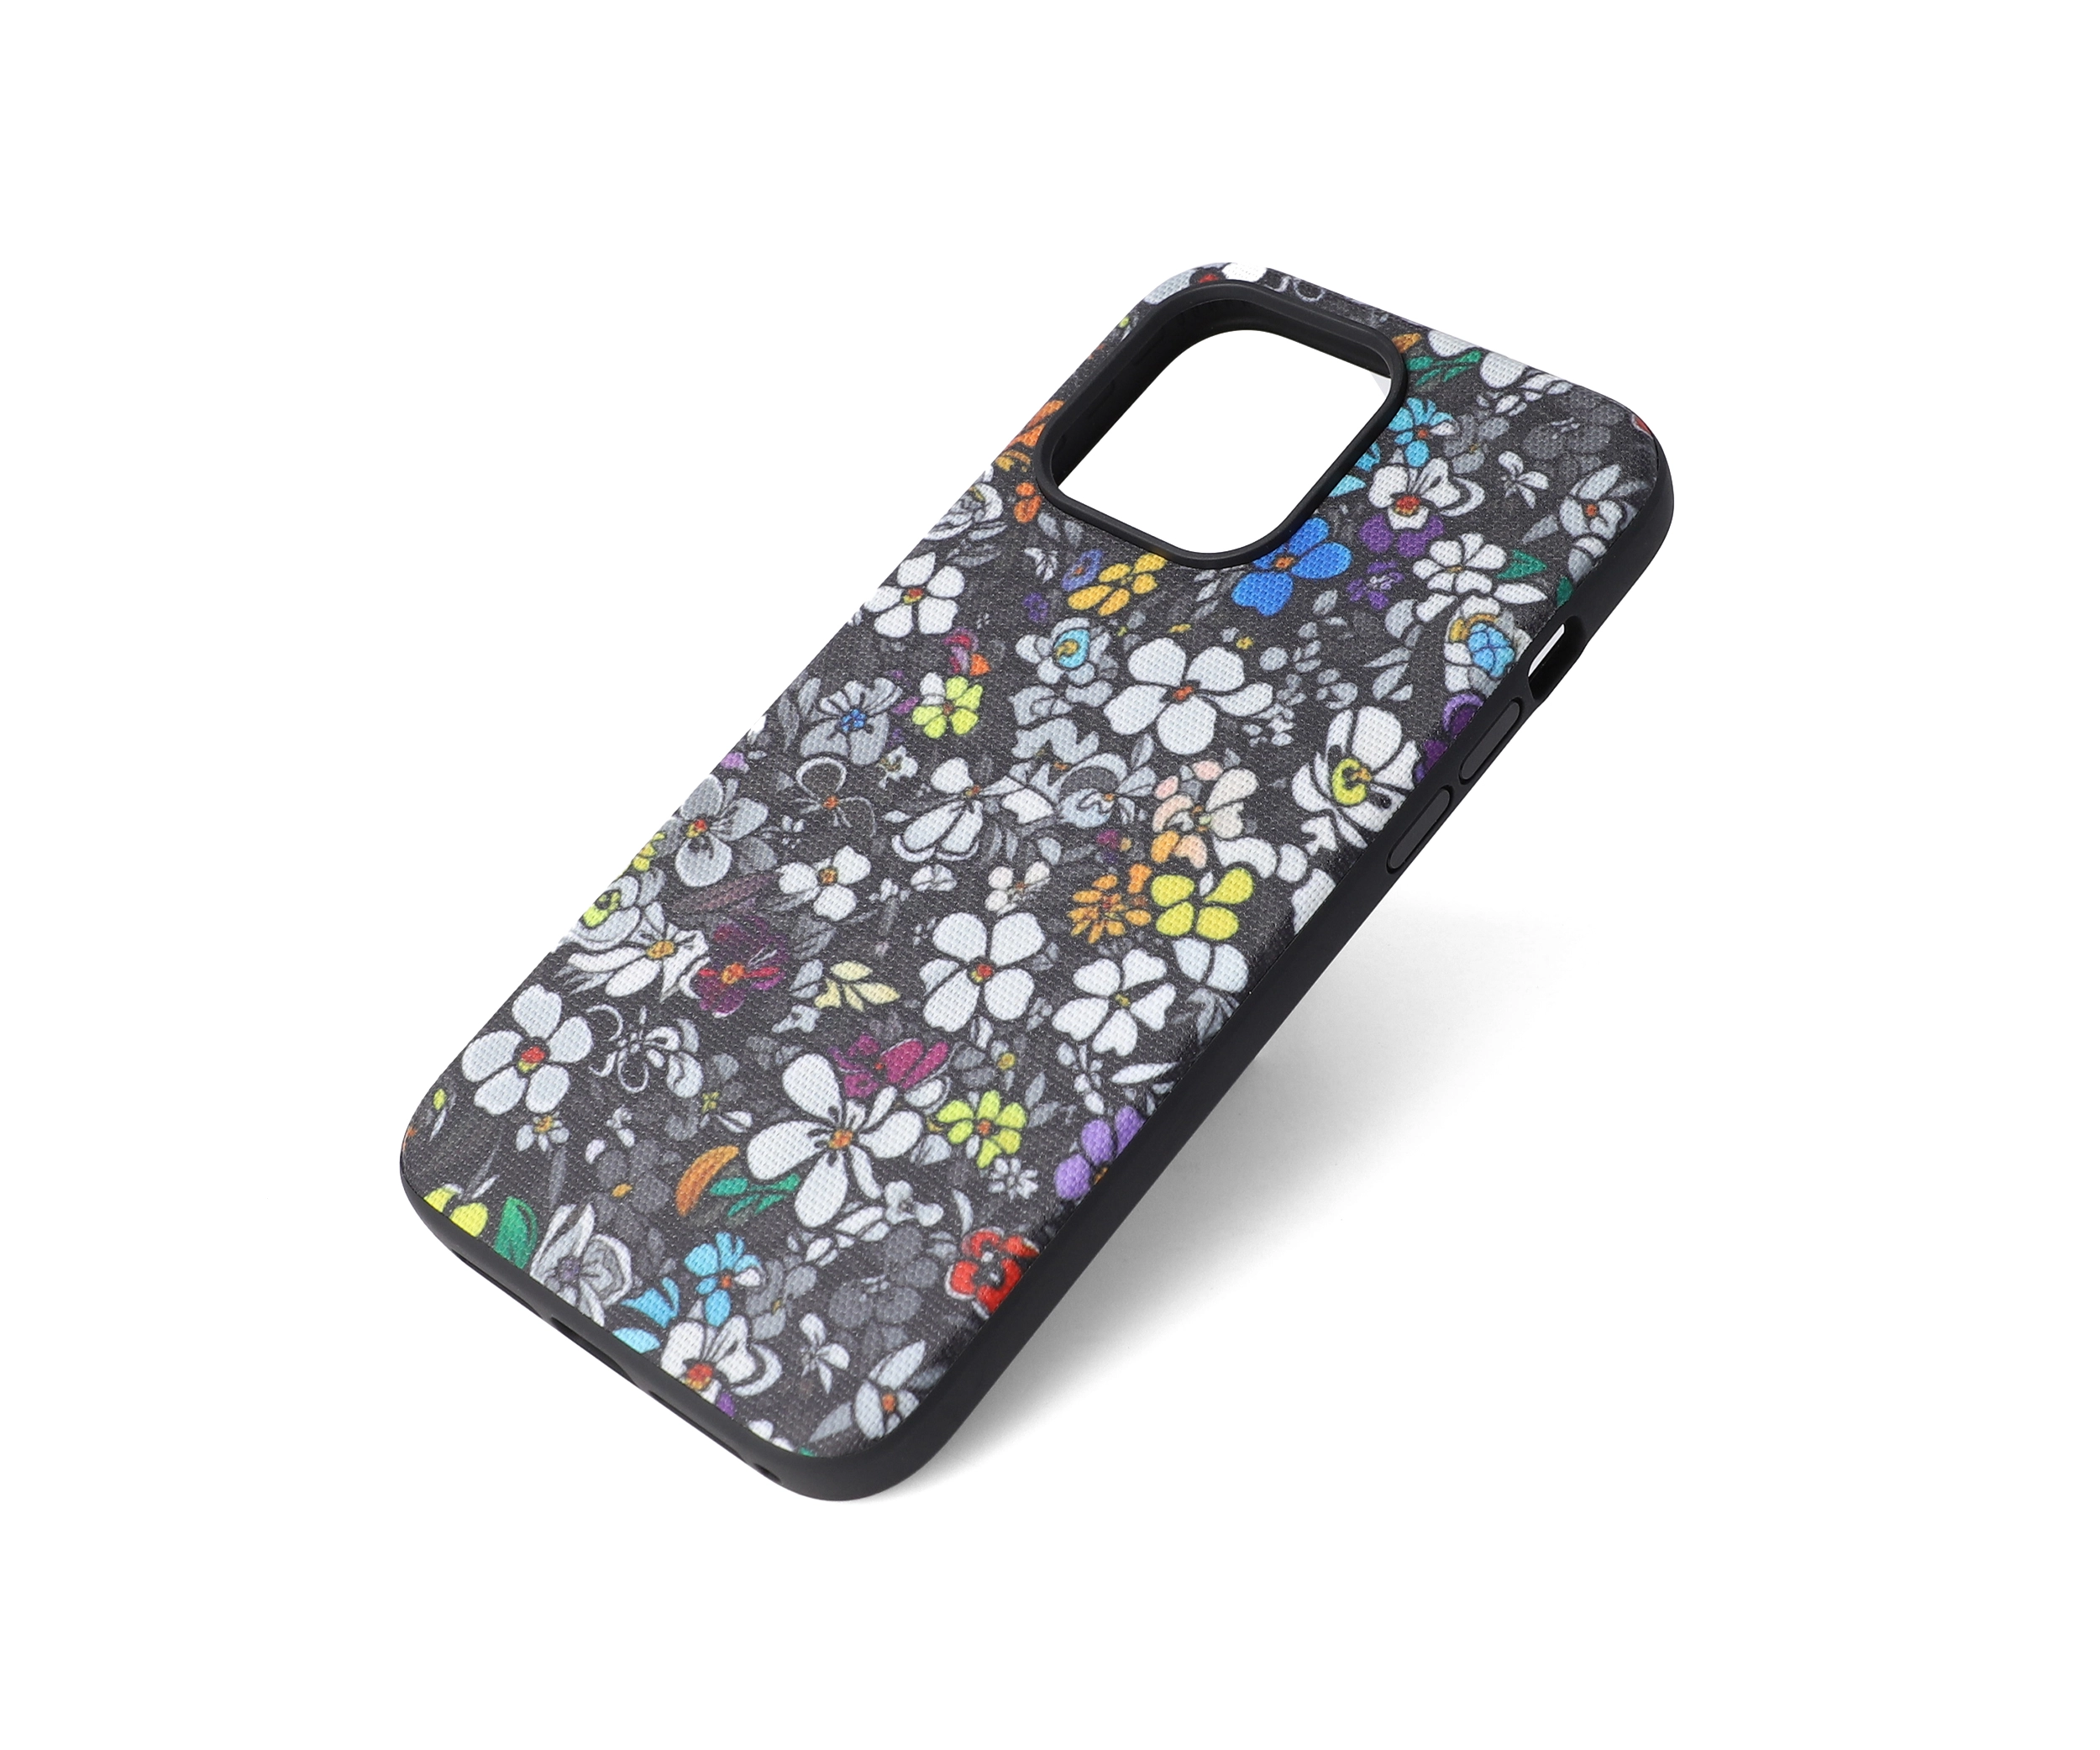 iphone case manufacturer